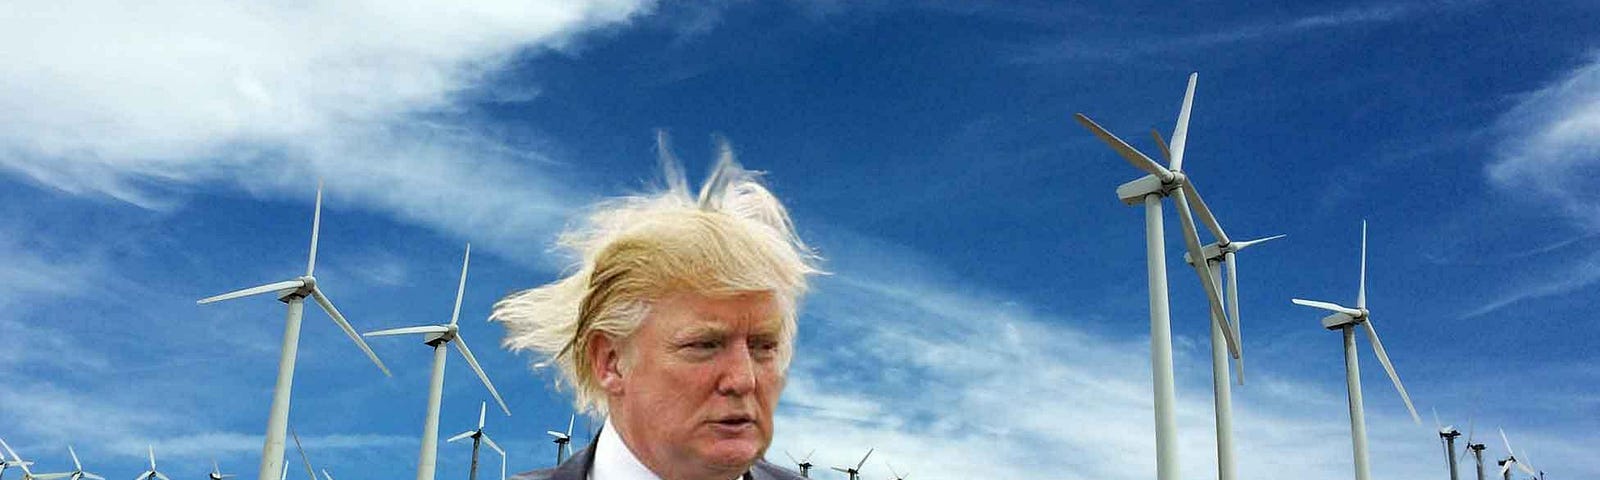 Donald Trump, hair askew amid wind turbines